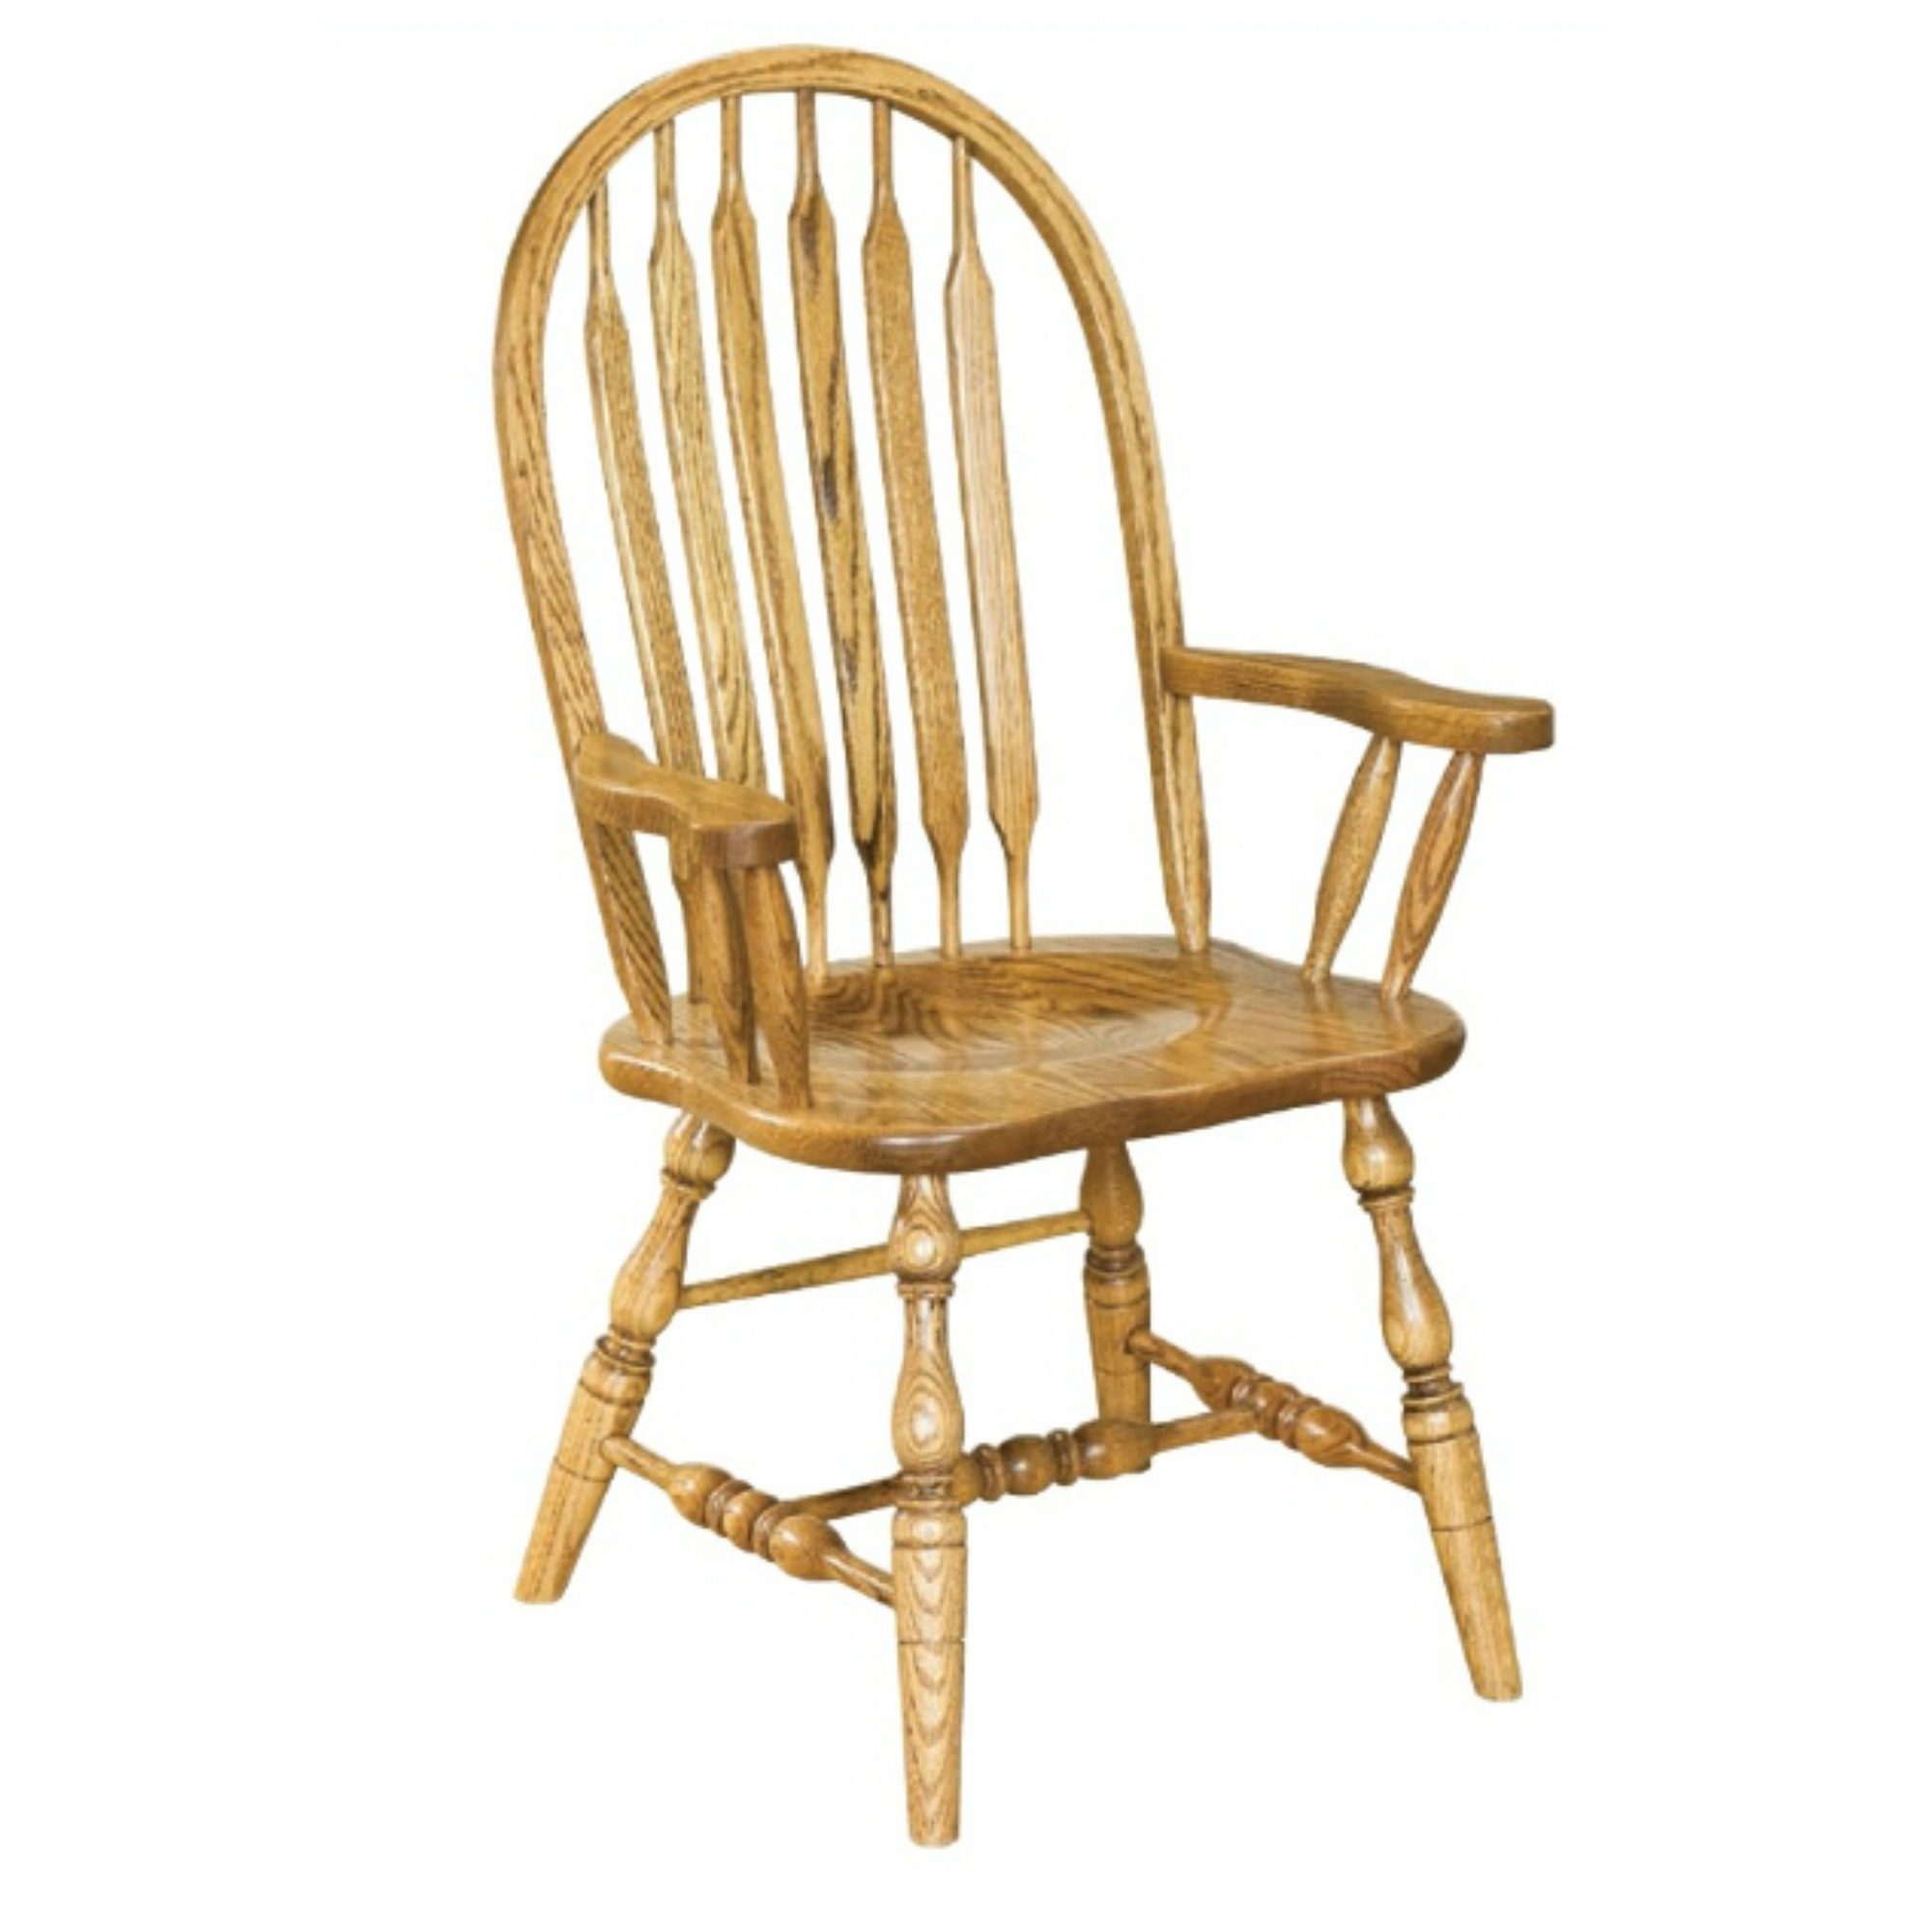 angola-arm-chair-amish-fusion-designs